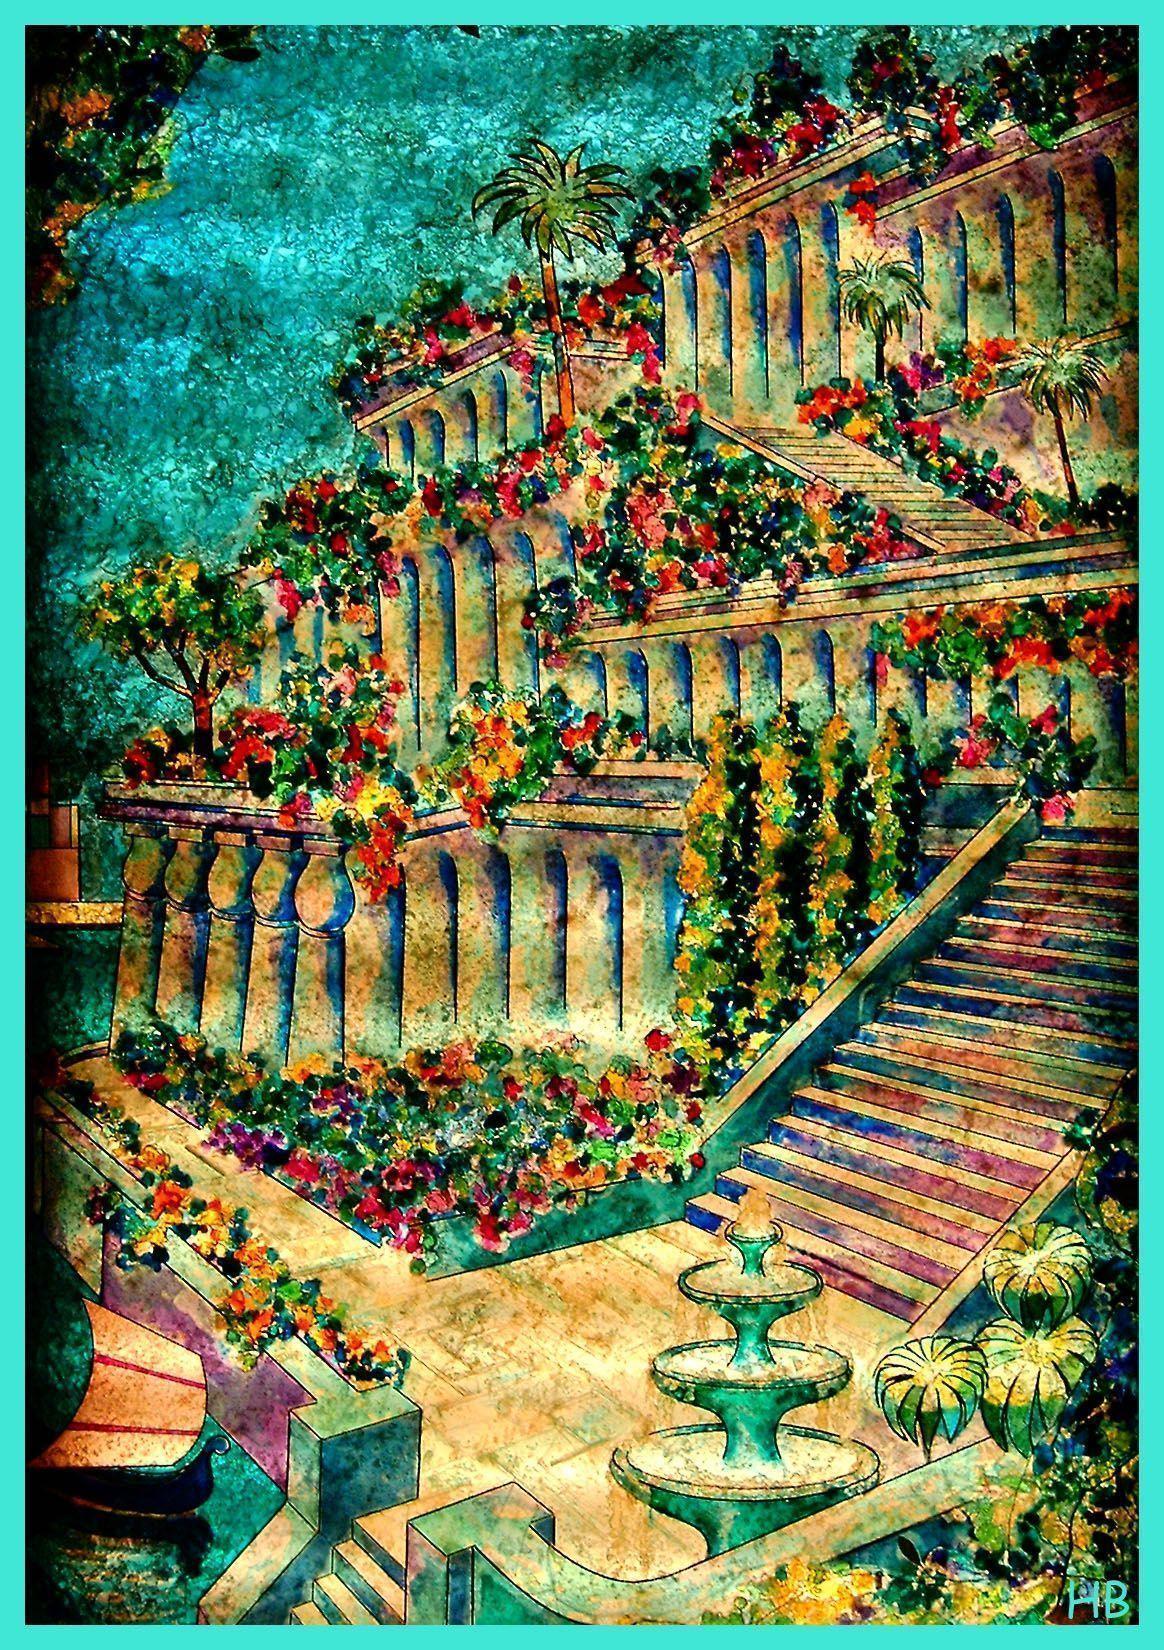 Hanging Gardens Of Babylon Wallpapers - Wallpaper Cave - 1164 x 1650 jpeg 563kB